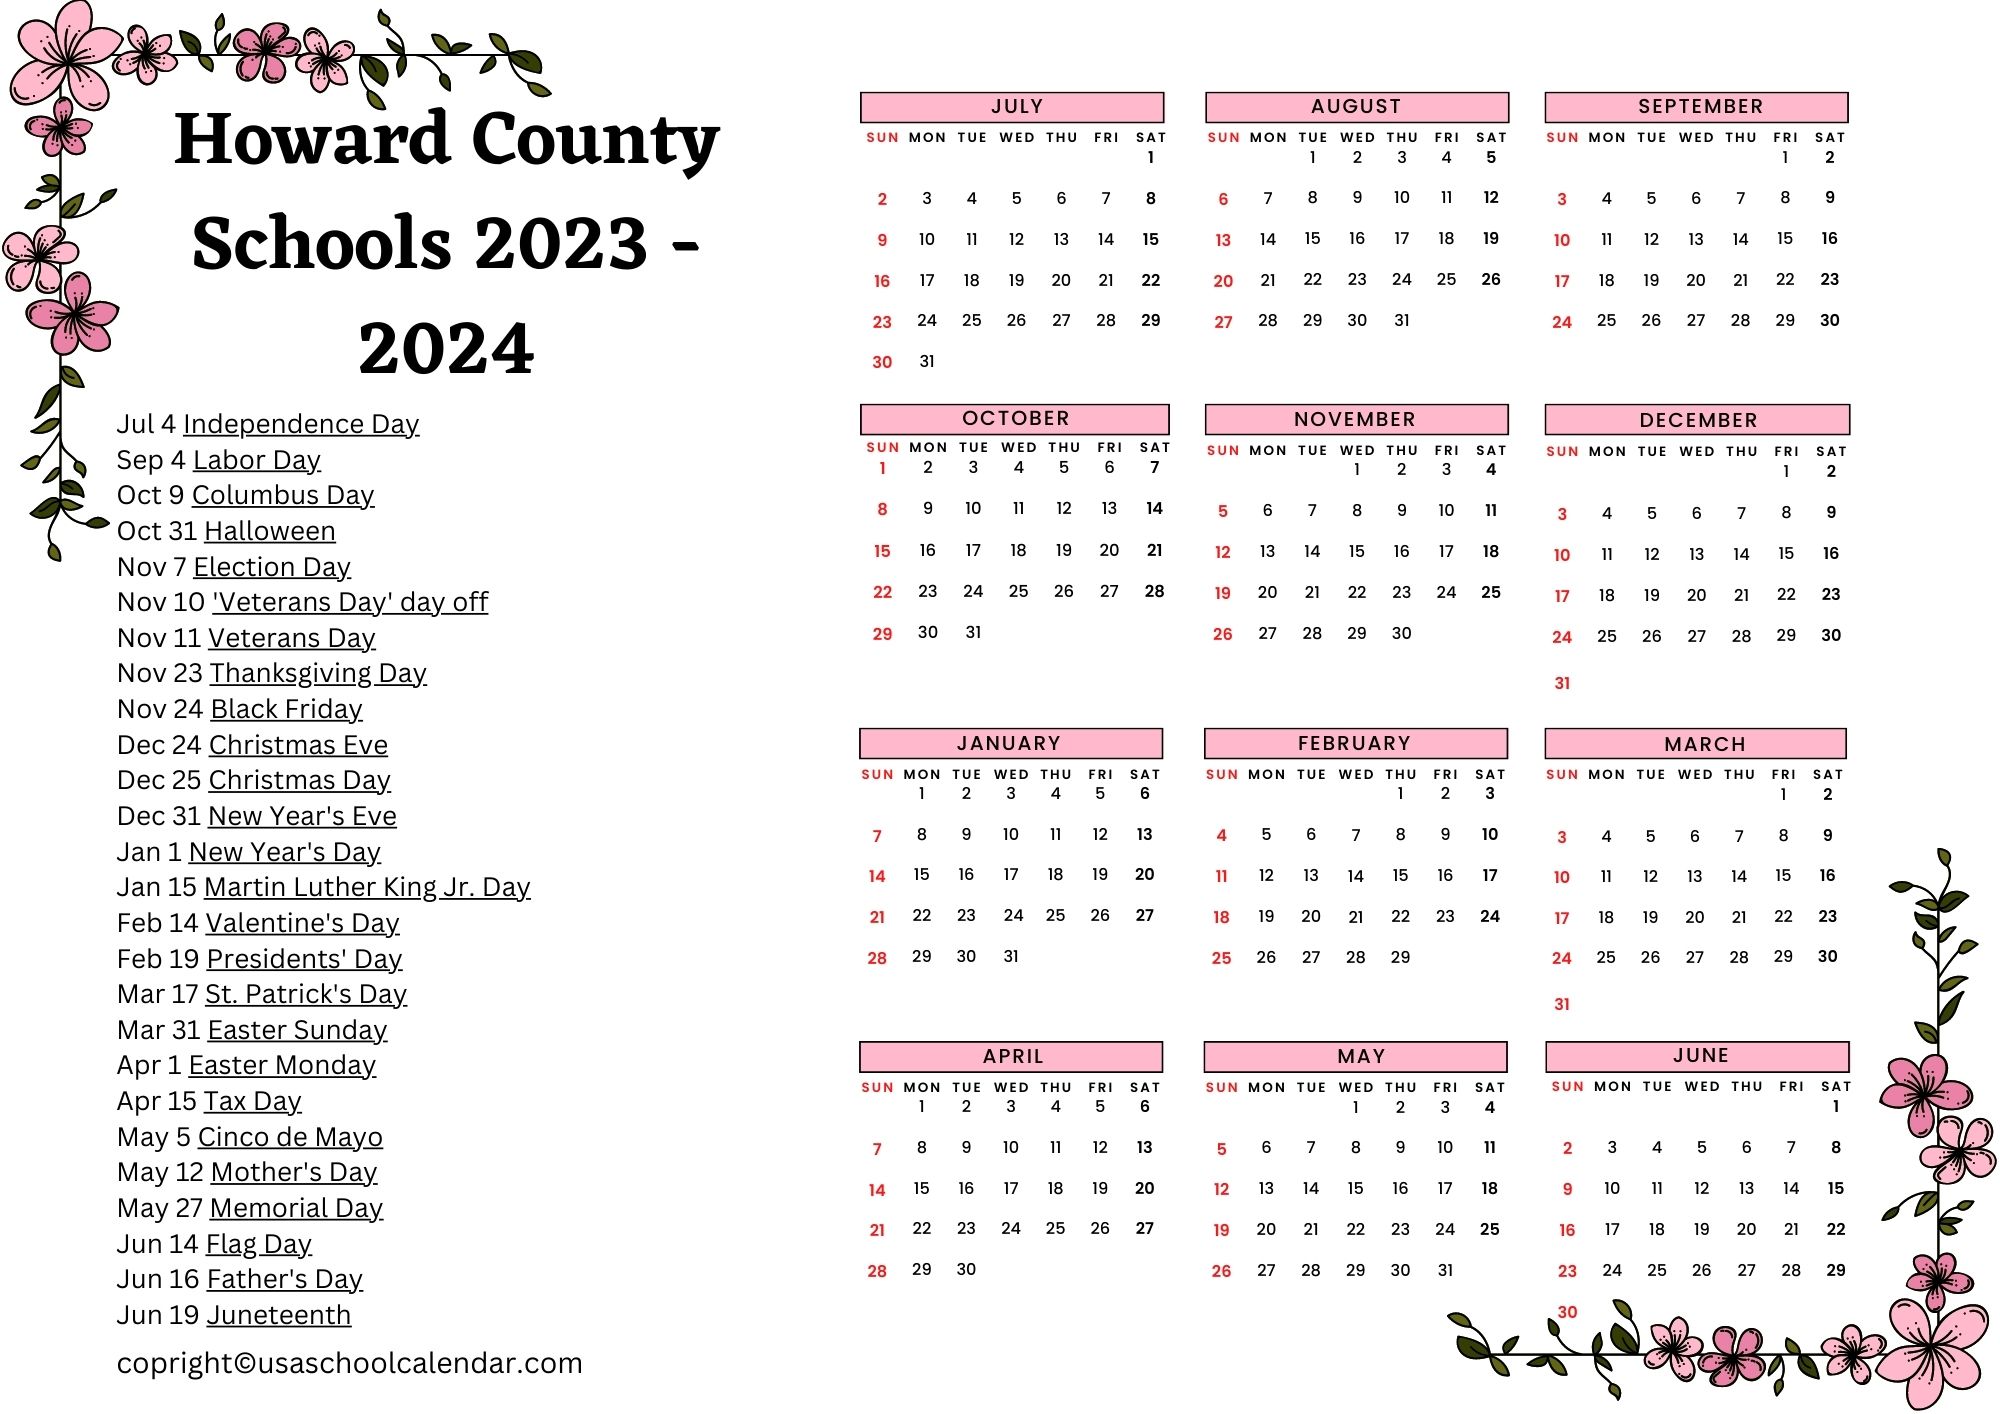 Howard County Schools Calendar Holidays 2023 2024